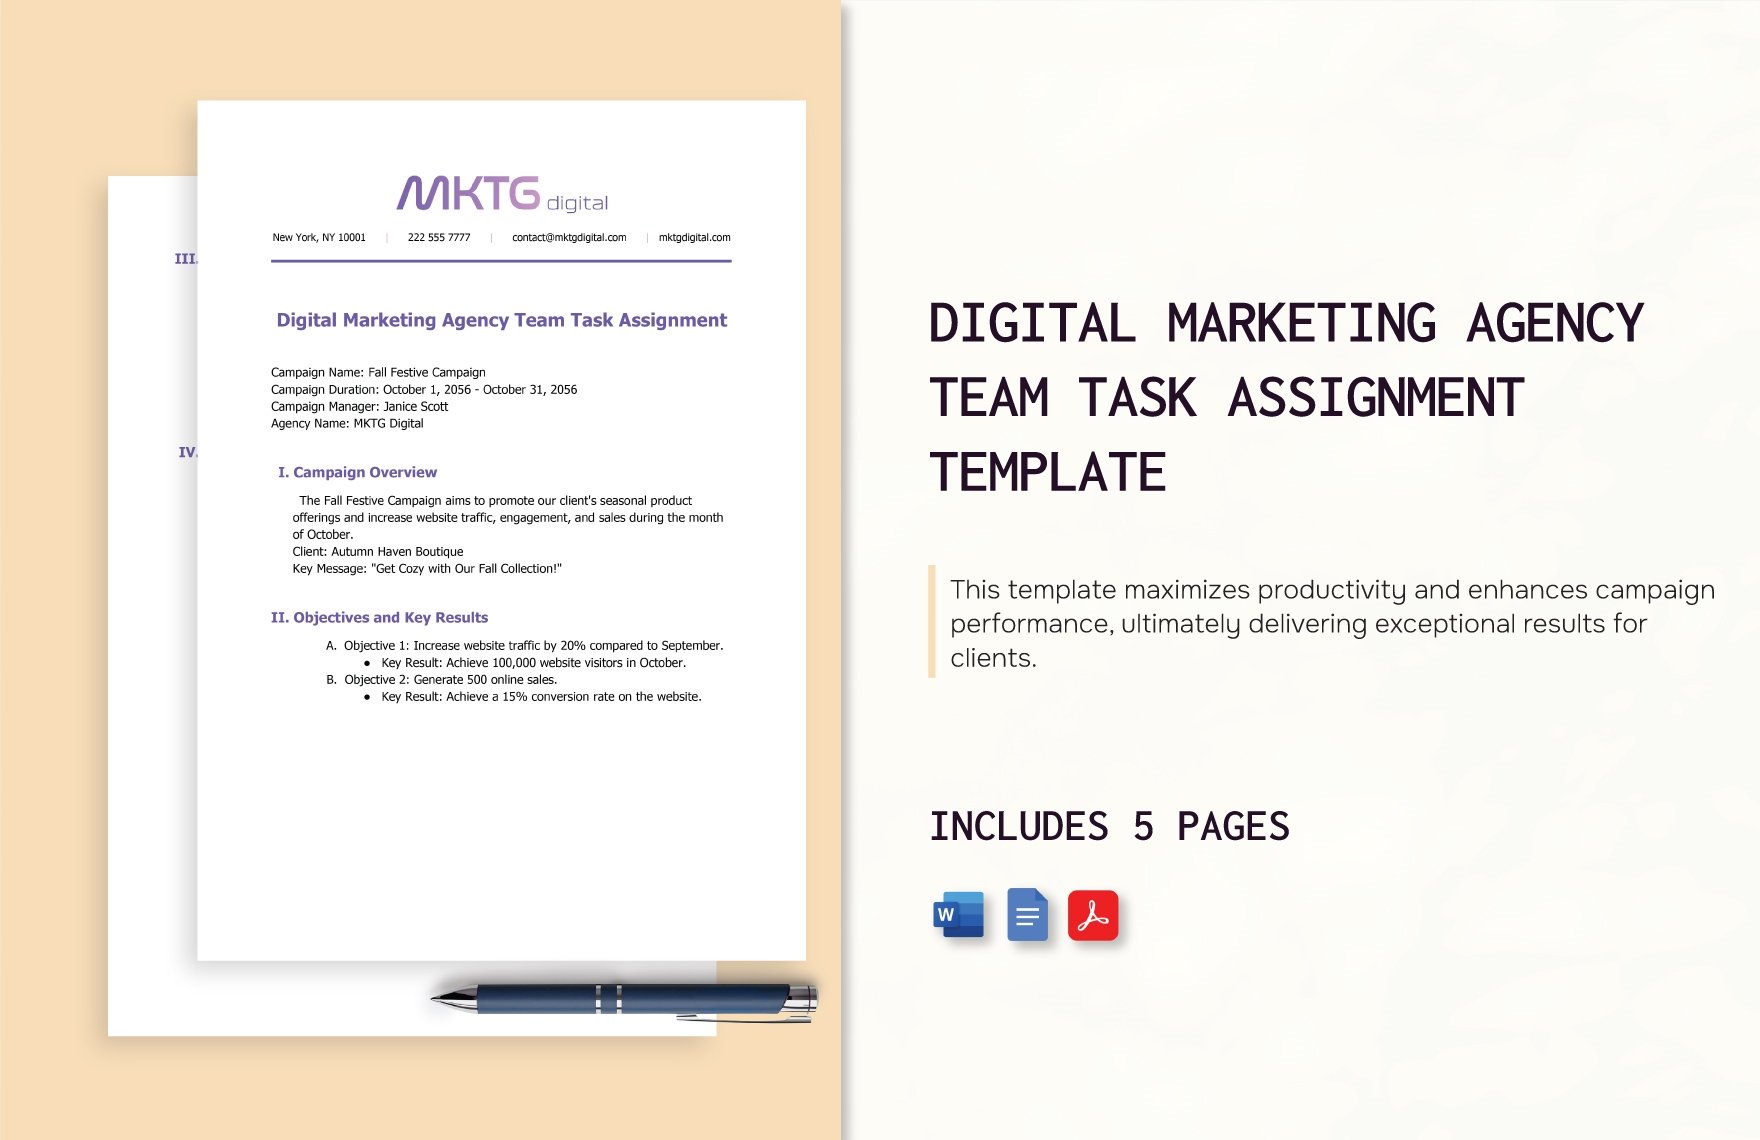 Digital Marketing Agency Team Task Assignment Template